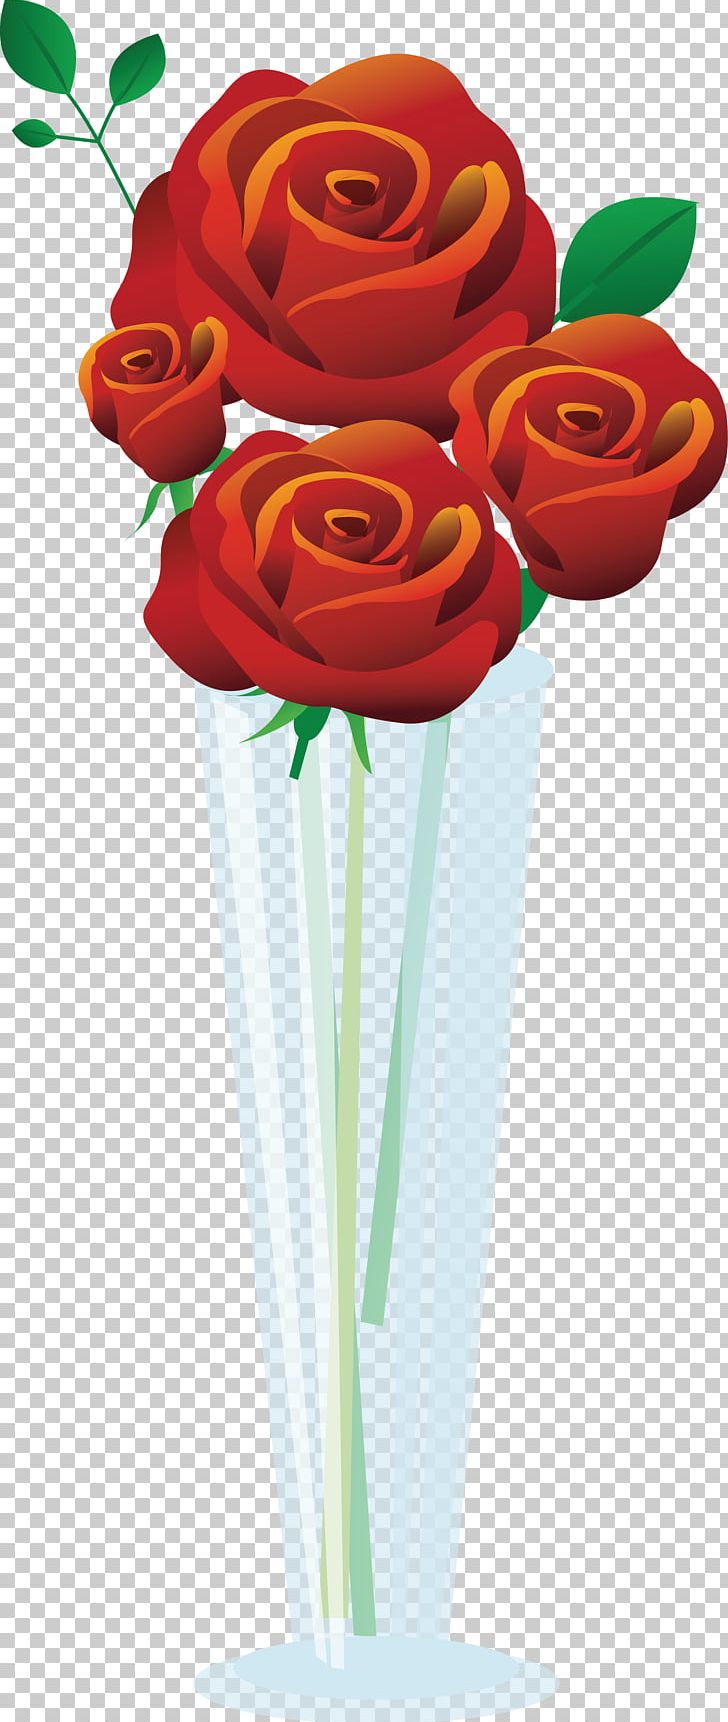 Cut Flowers Vase Beach Rose PNG, Clipart, Artificial Flower, Beach Rose, Cut Flowers, Download, Encapsulated Postscript Free PNG Download